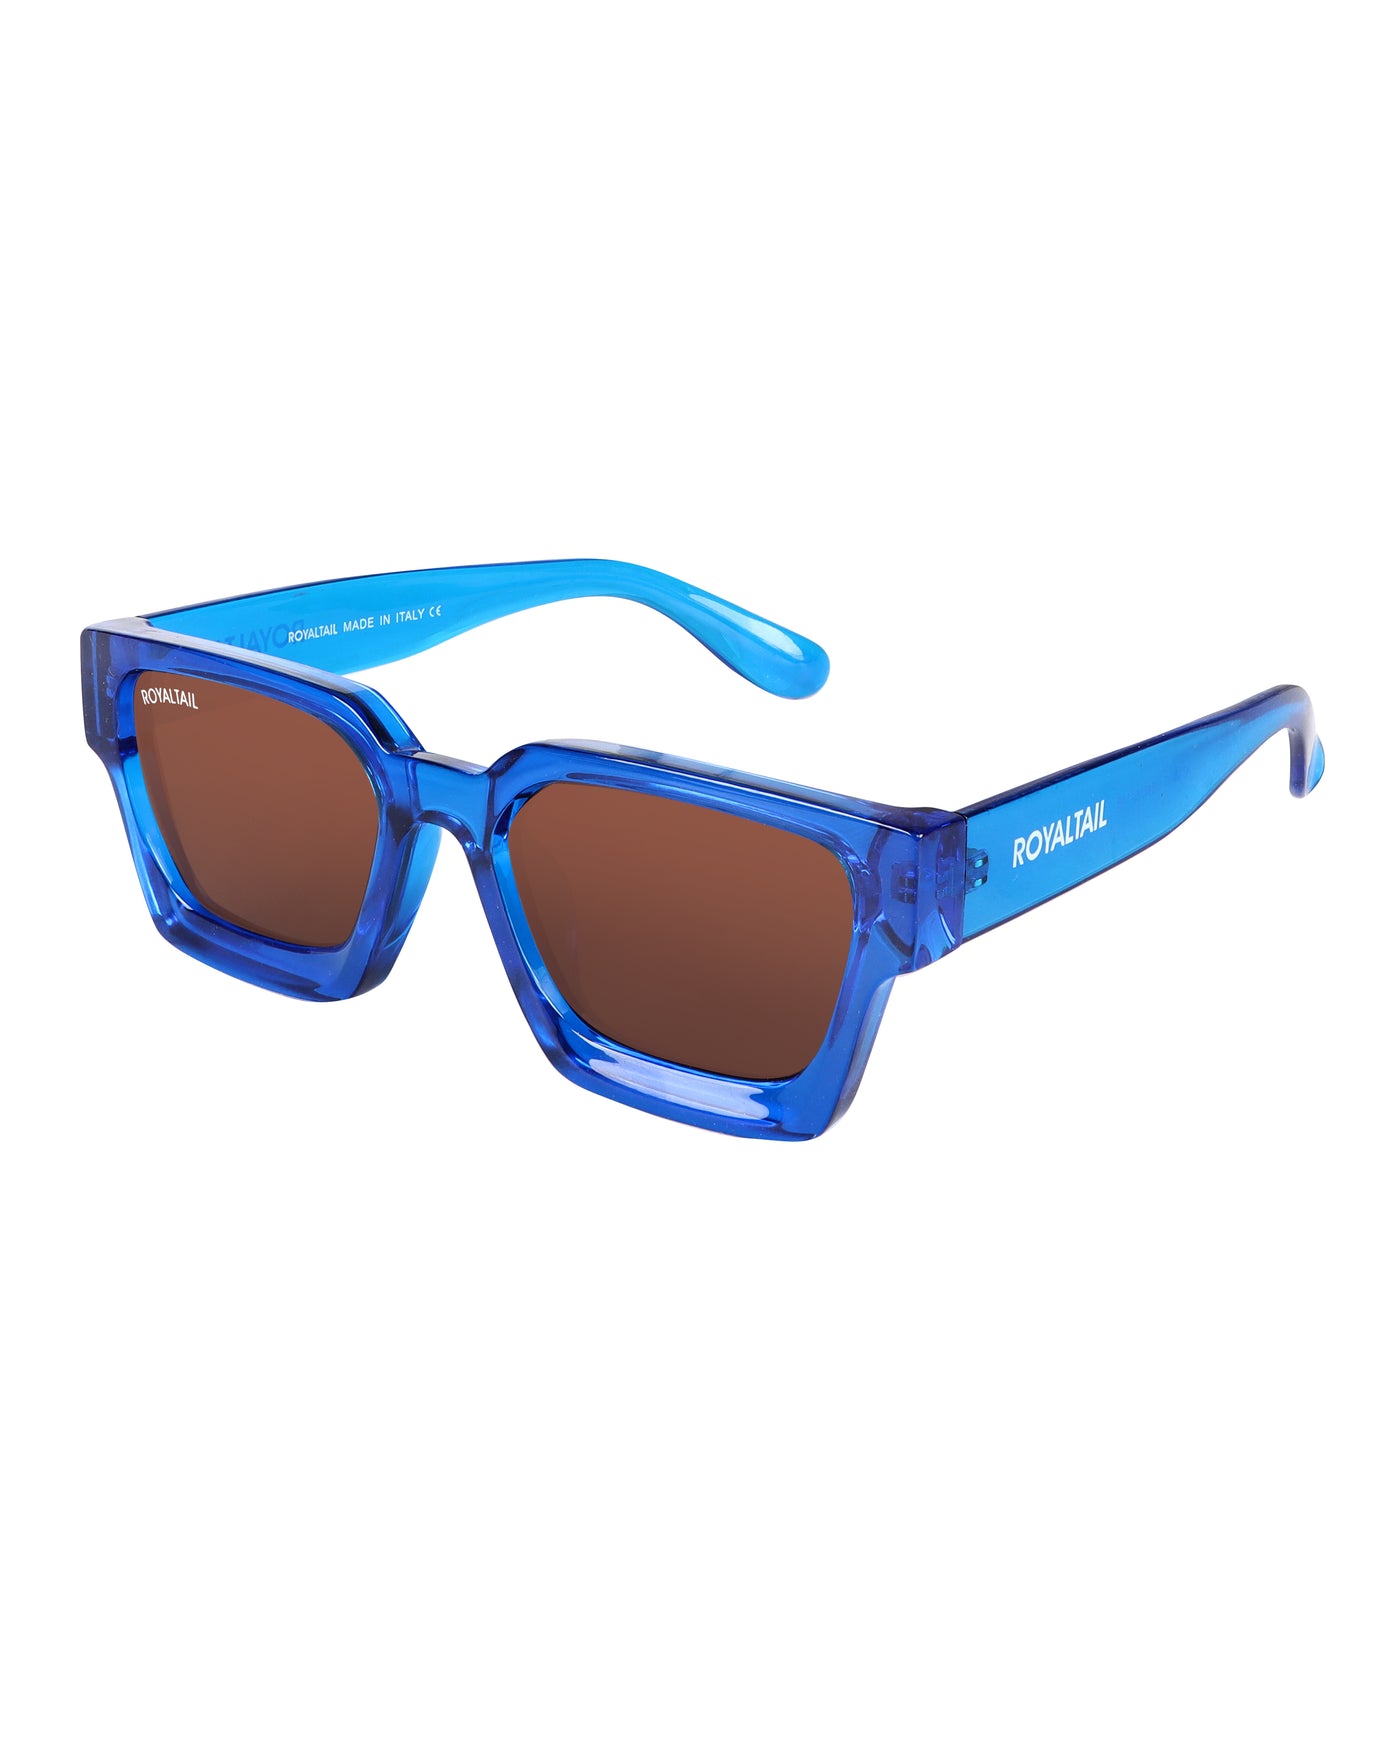 Tartaruga Unisex Classic Thick Square Aqua Blue UV Protected Sunglasses RT068